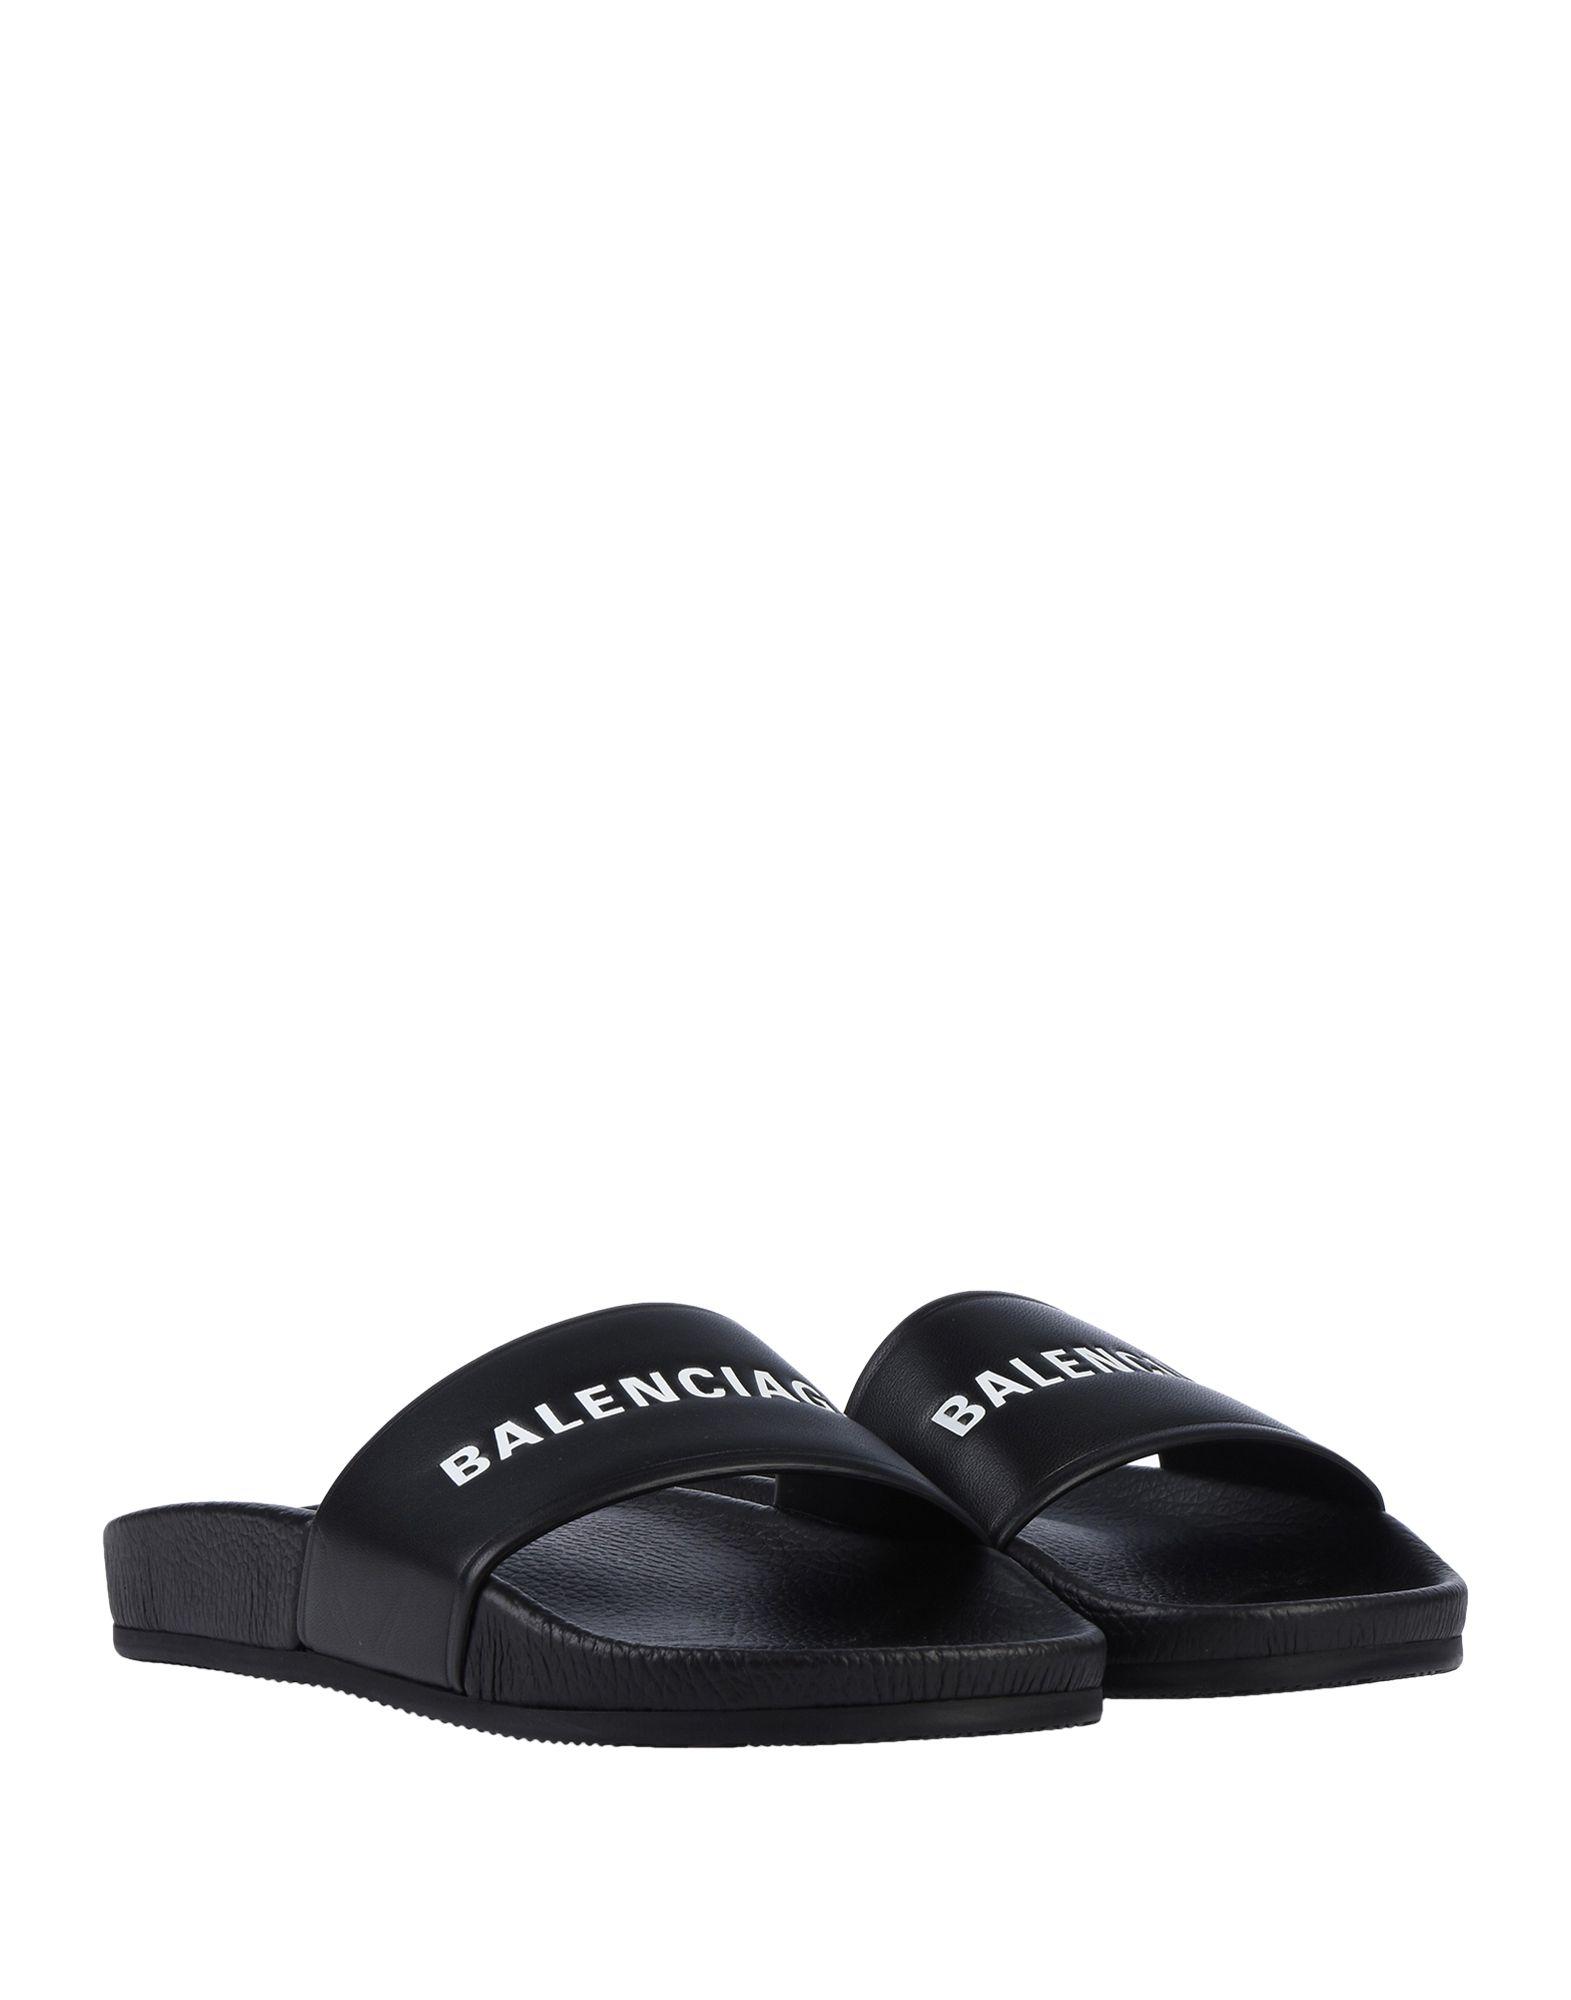 Balenciaga Smooth Rubber Logo Pool Slides in Black White (Black) - Save 40%  | Lyst